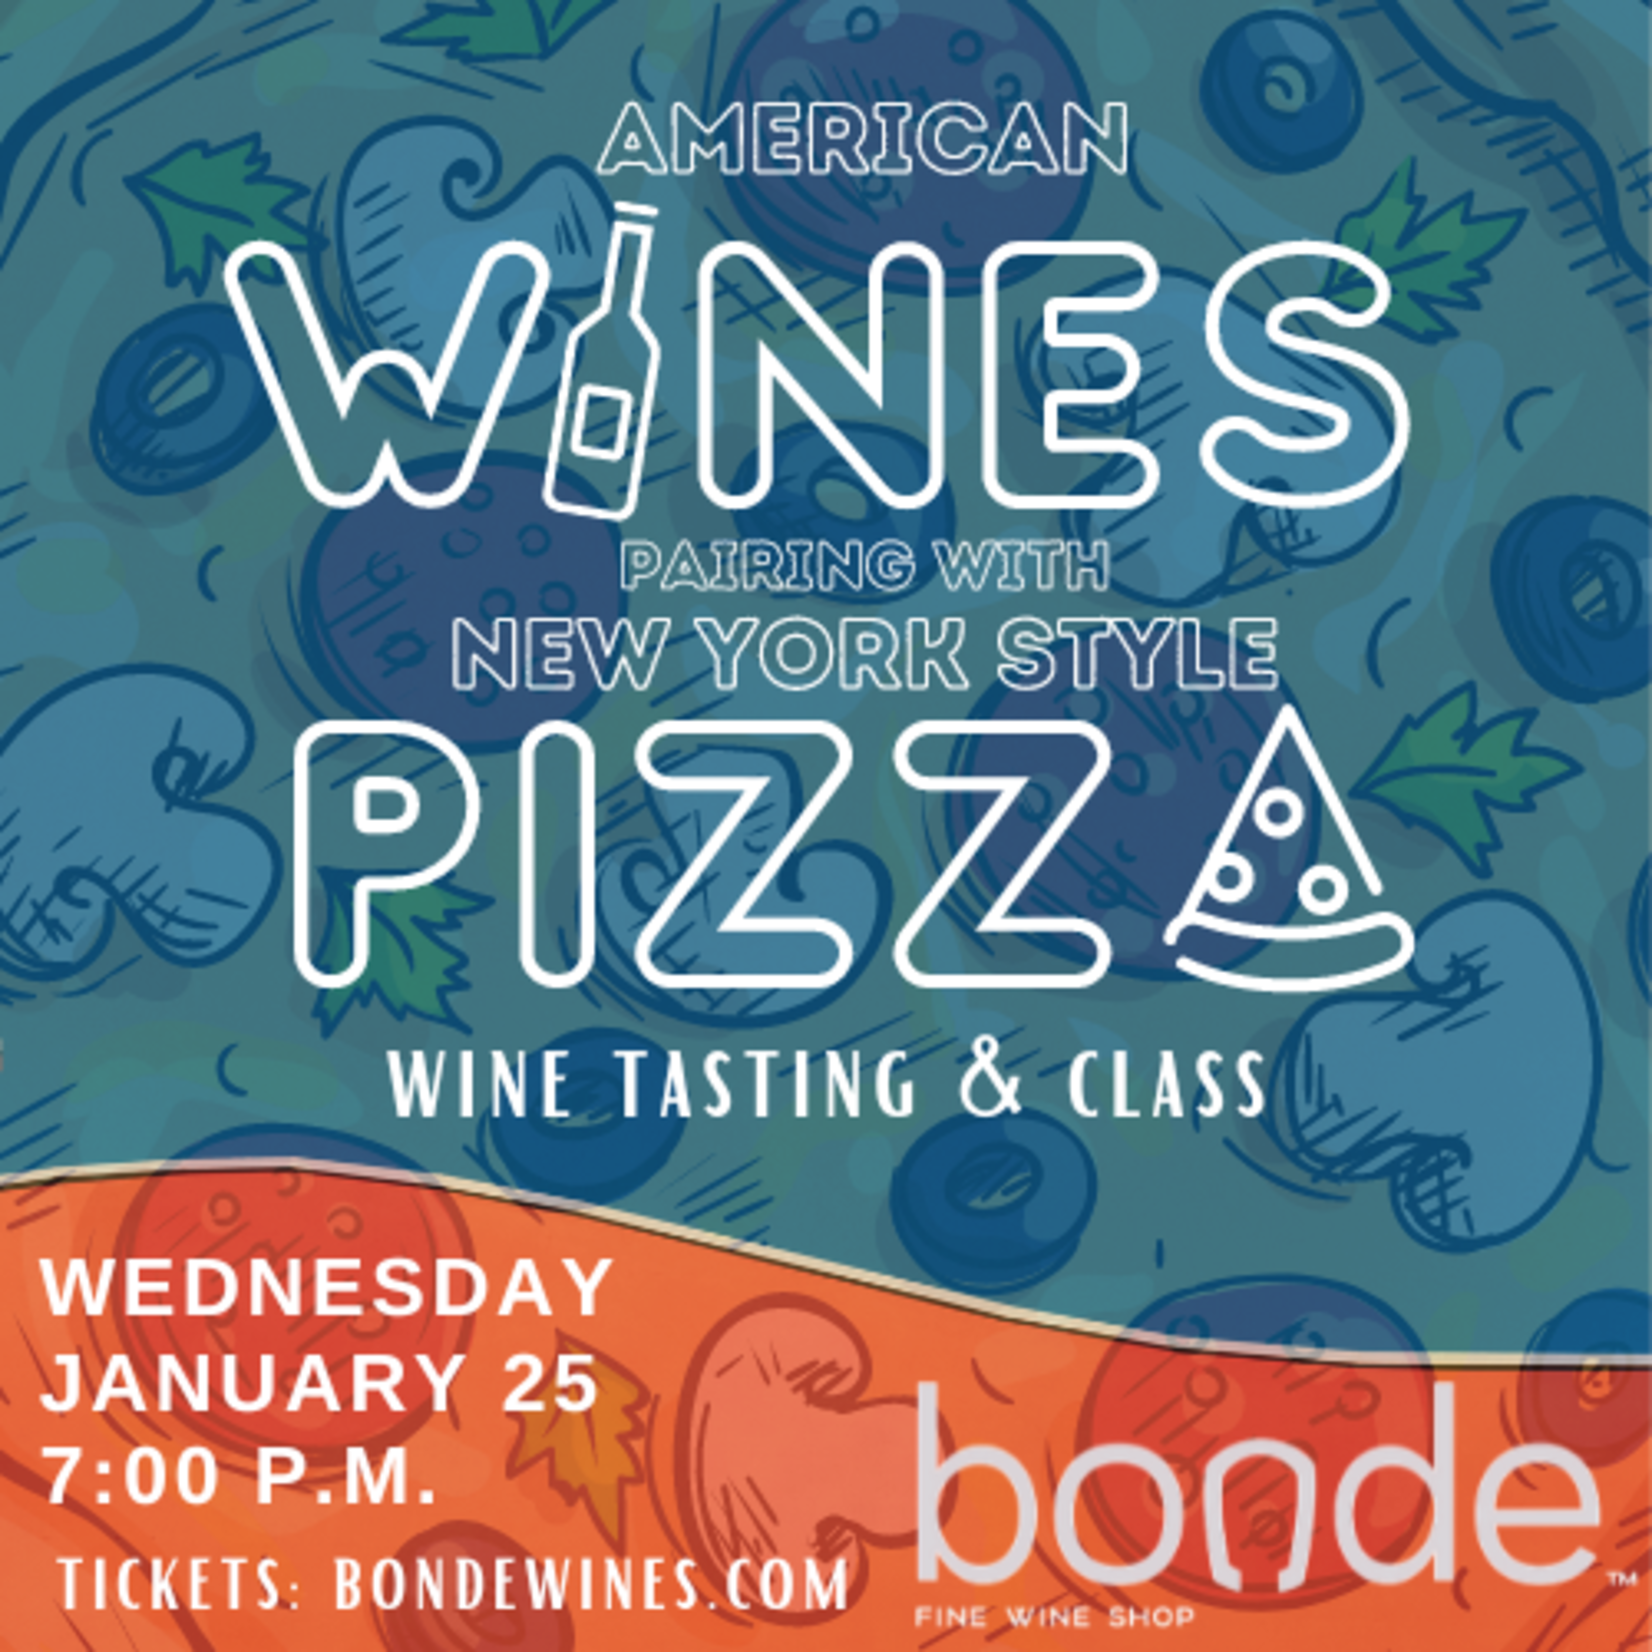 New York Style Pizza & American Wine - Wine Tasting & Class - Wednesday January 25, 7:00 p.m.